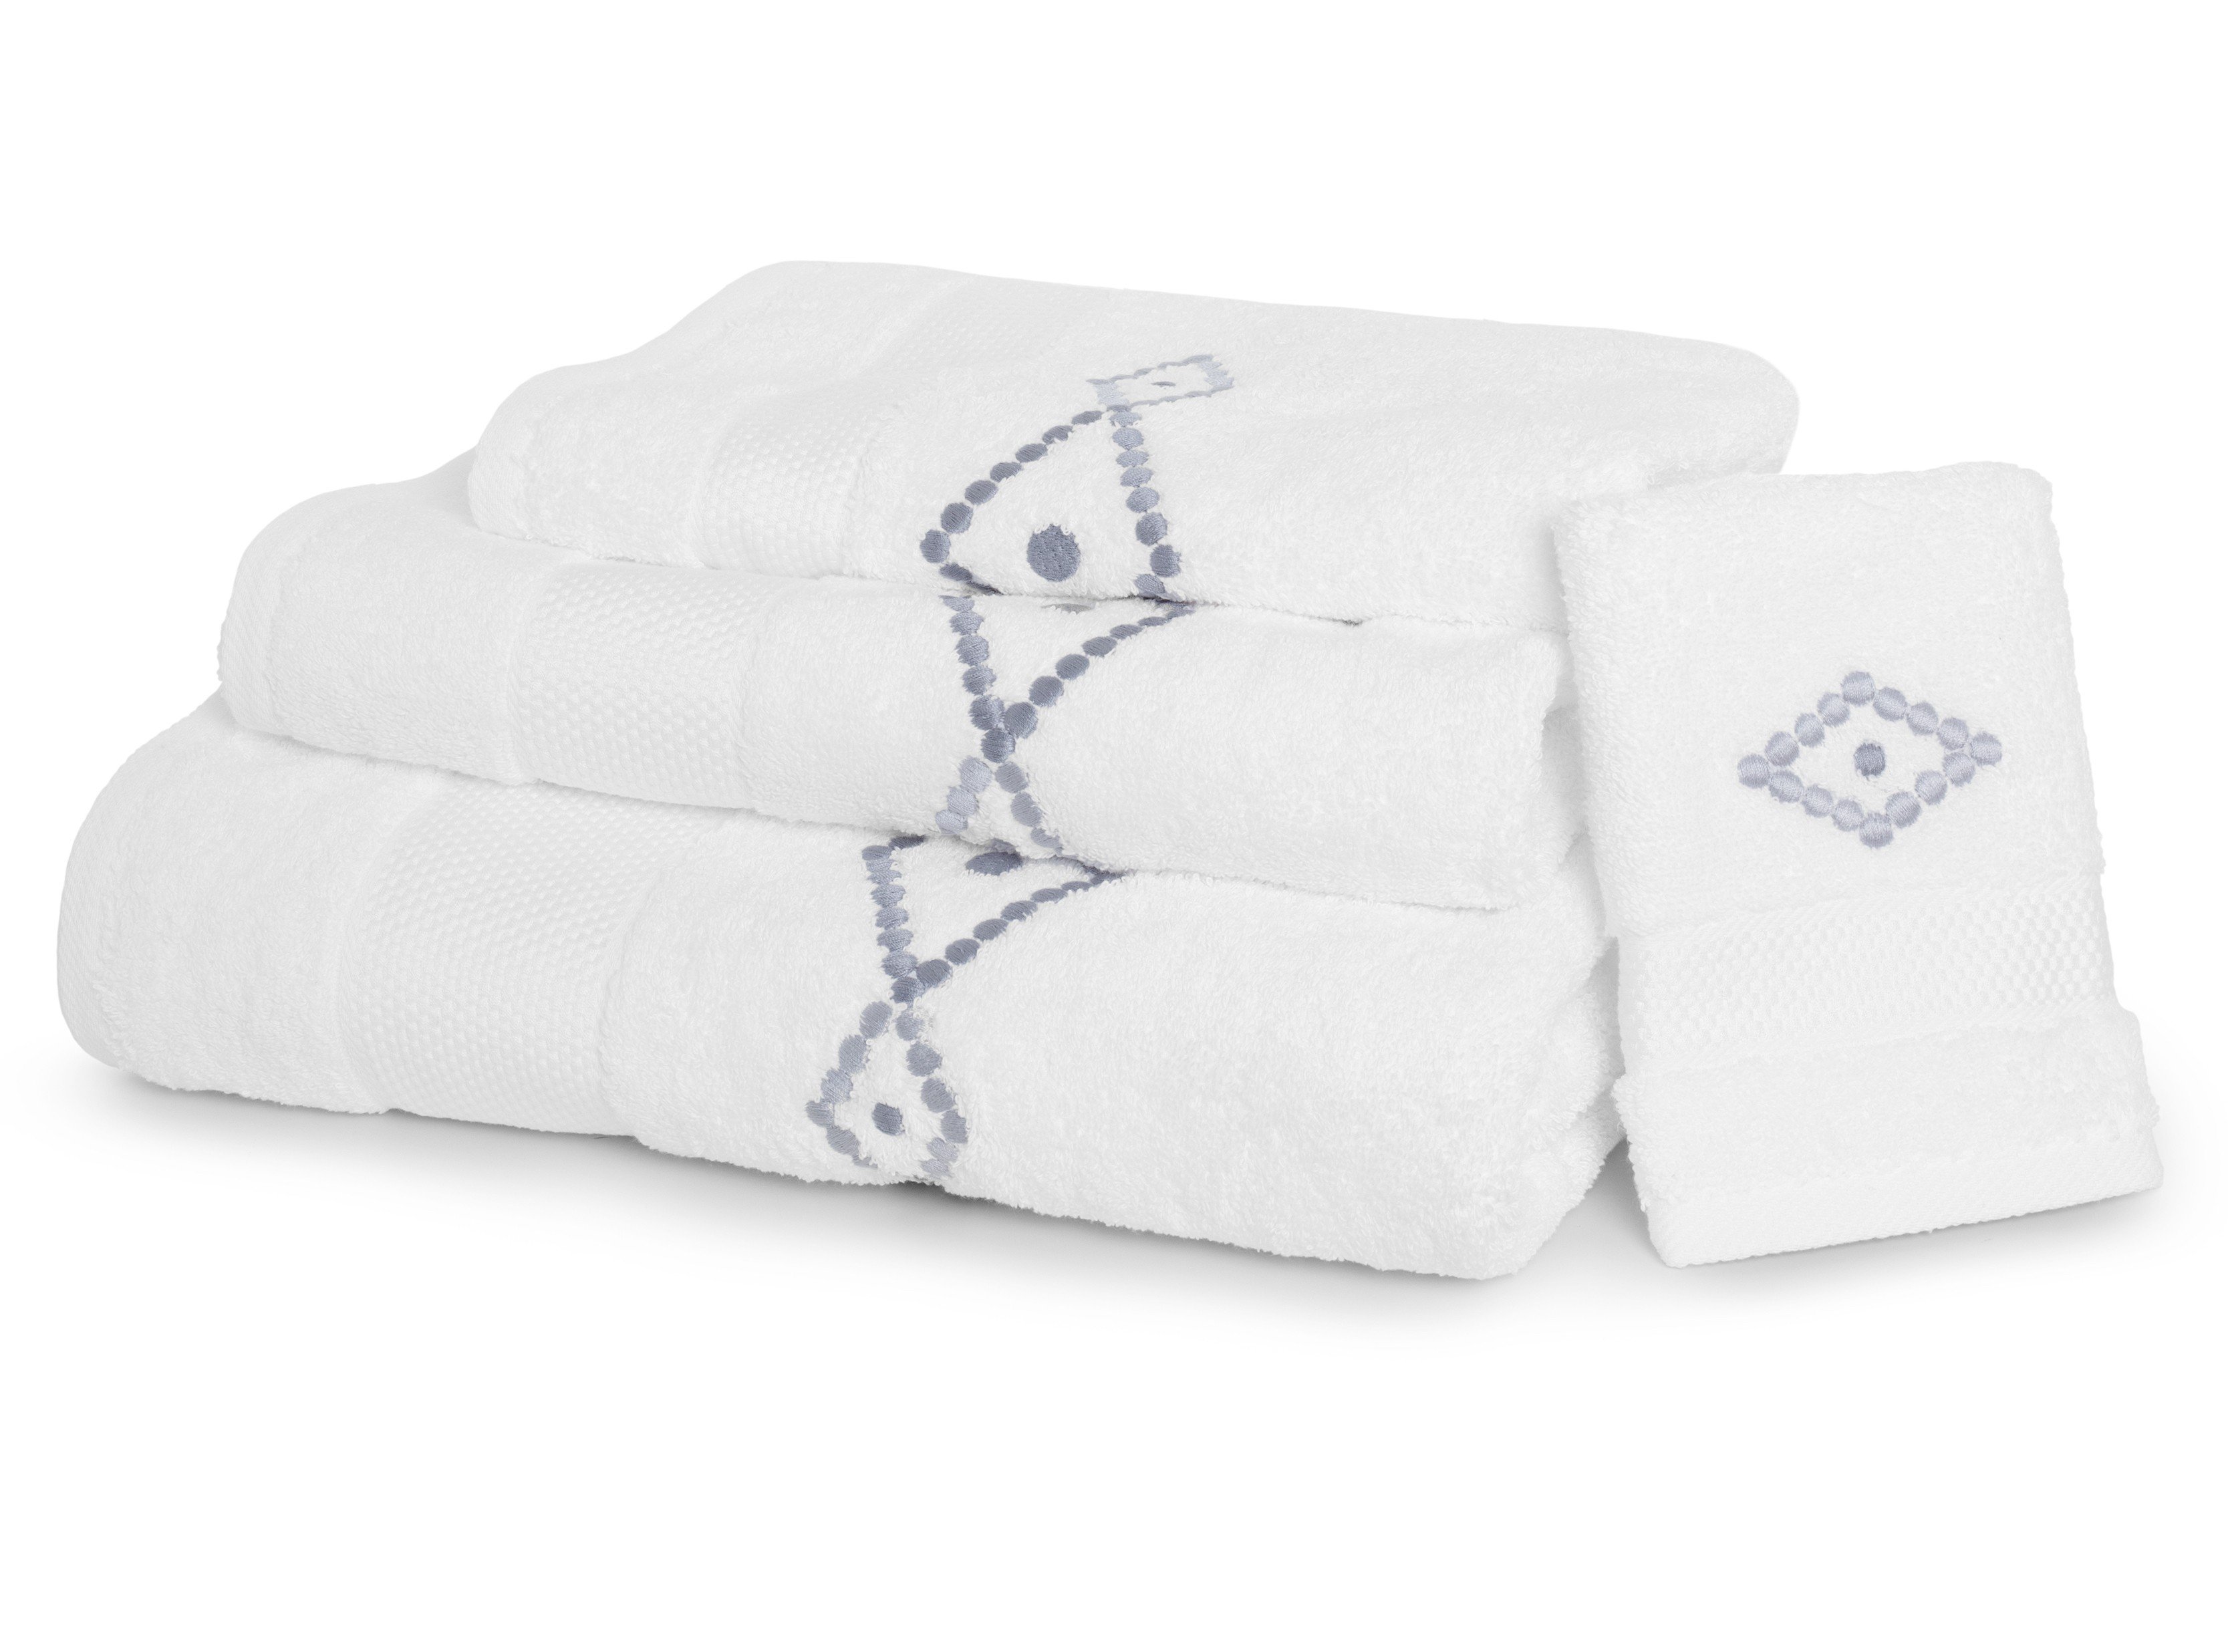 VARIATION embroidered bath towels